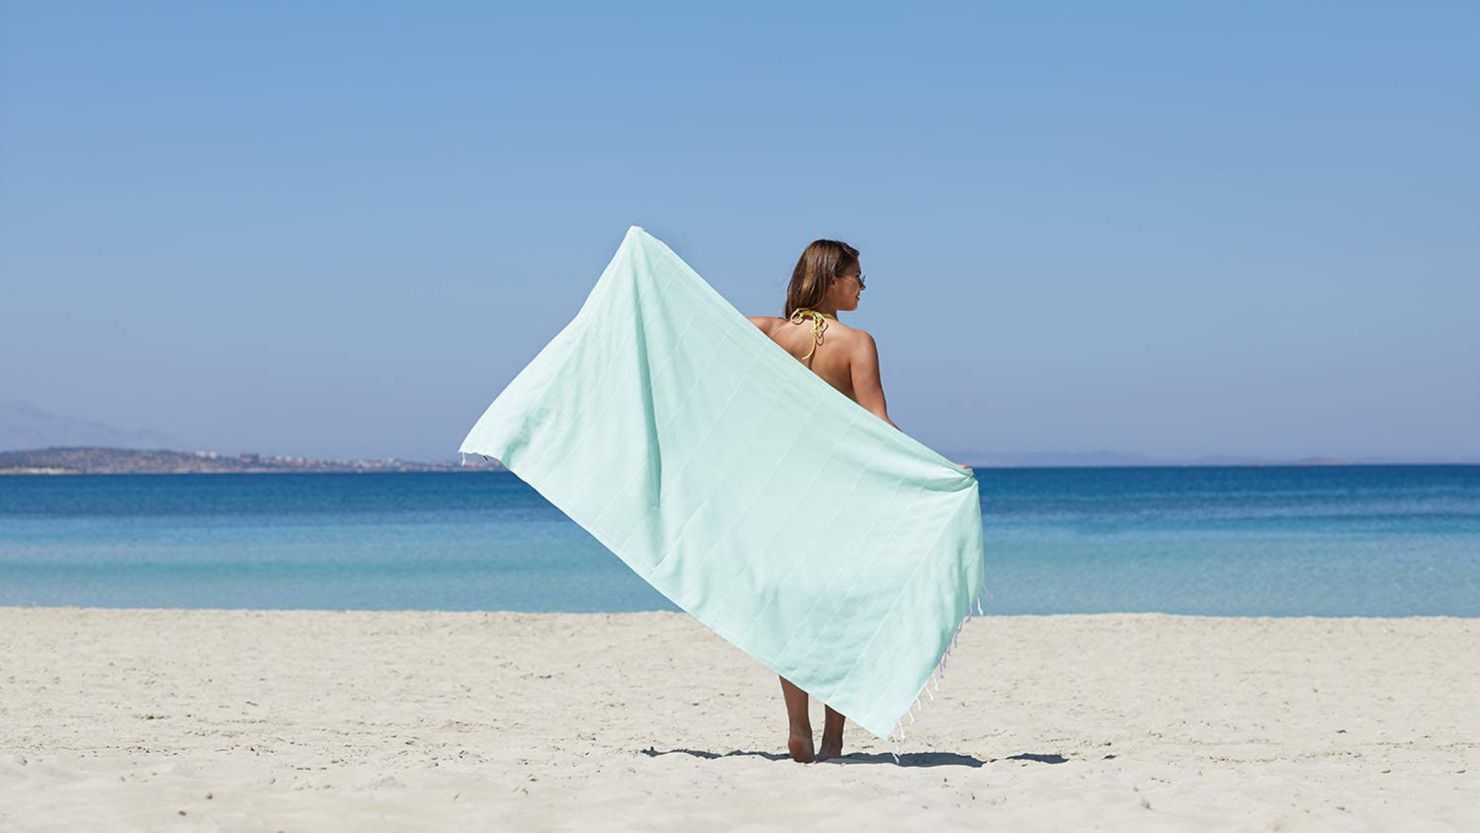 Пляжное полотенце. Полотенце на шезлонге. Полотенце на море. Полотенце на пляже пляж.